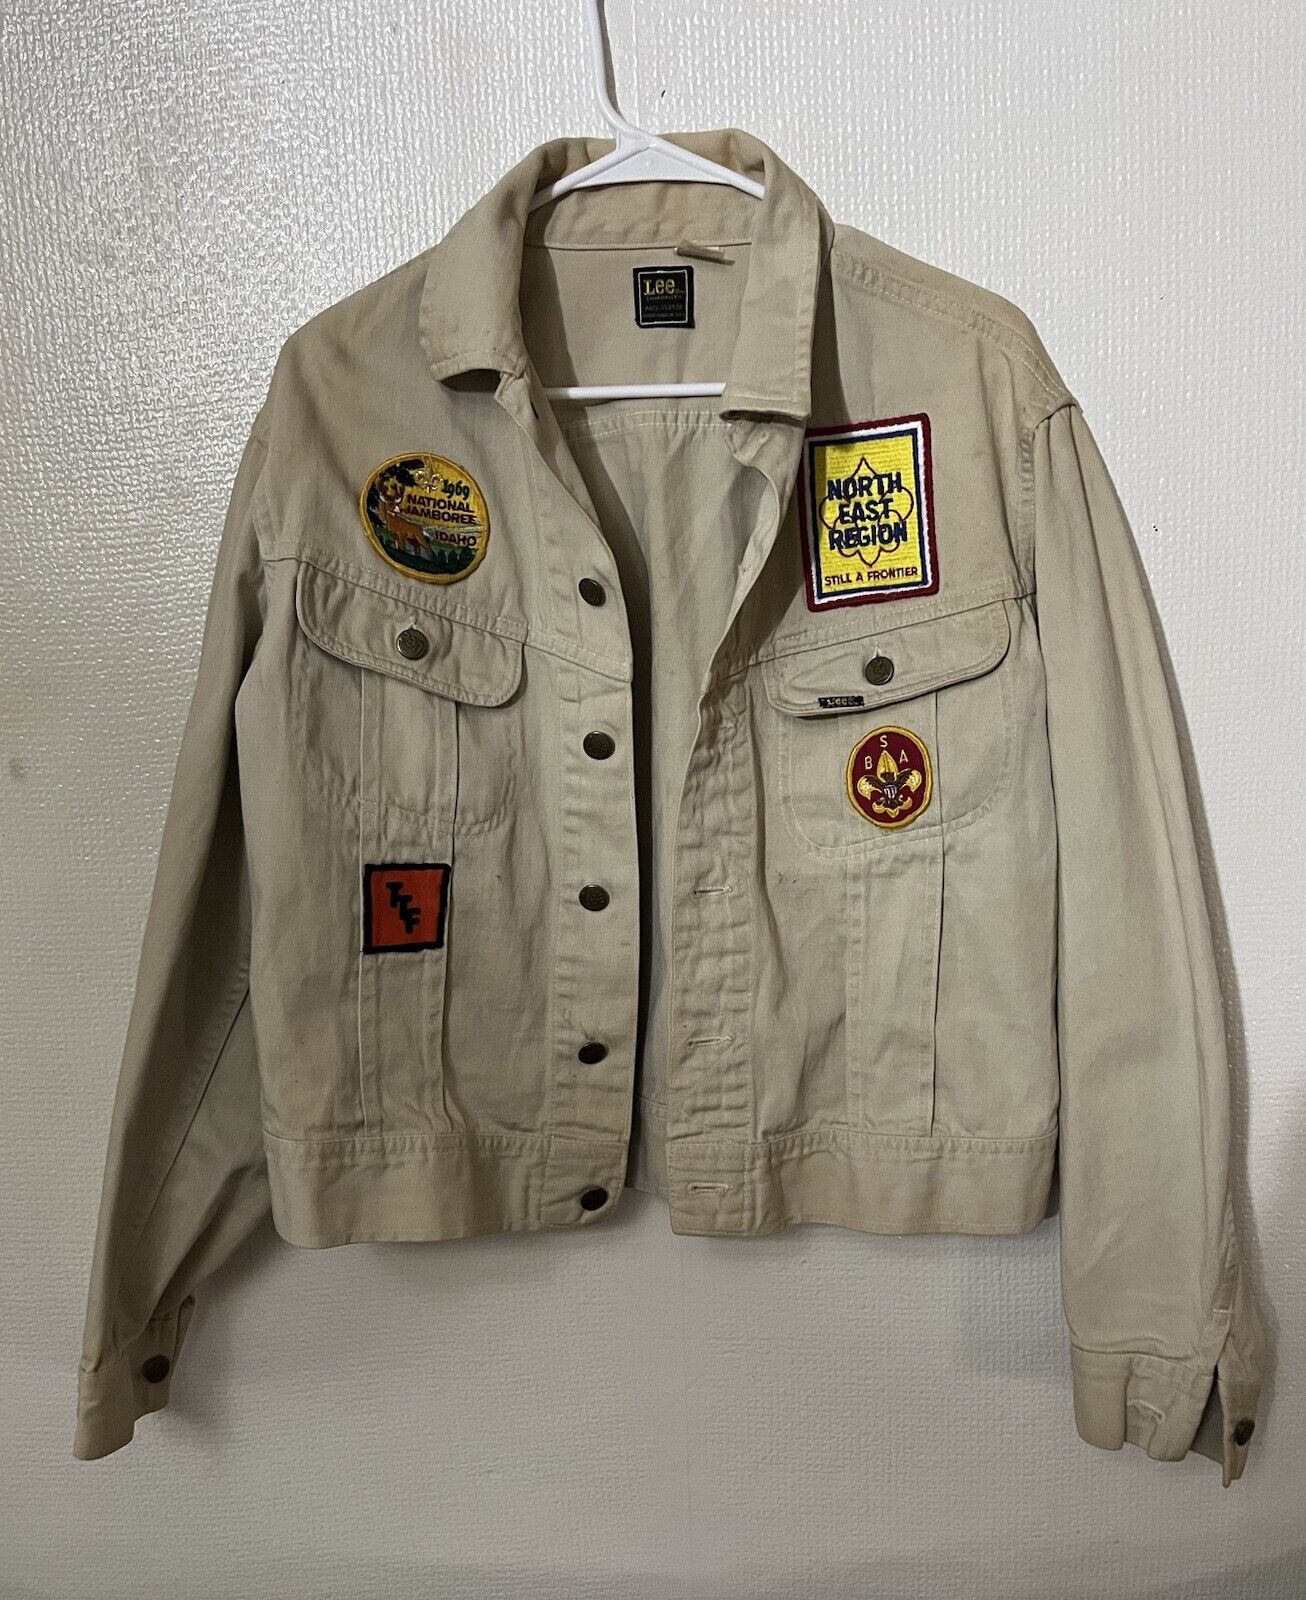 Vintage LEE Jacket Boy Scout jacket great condition